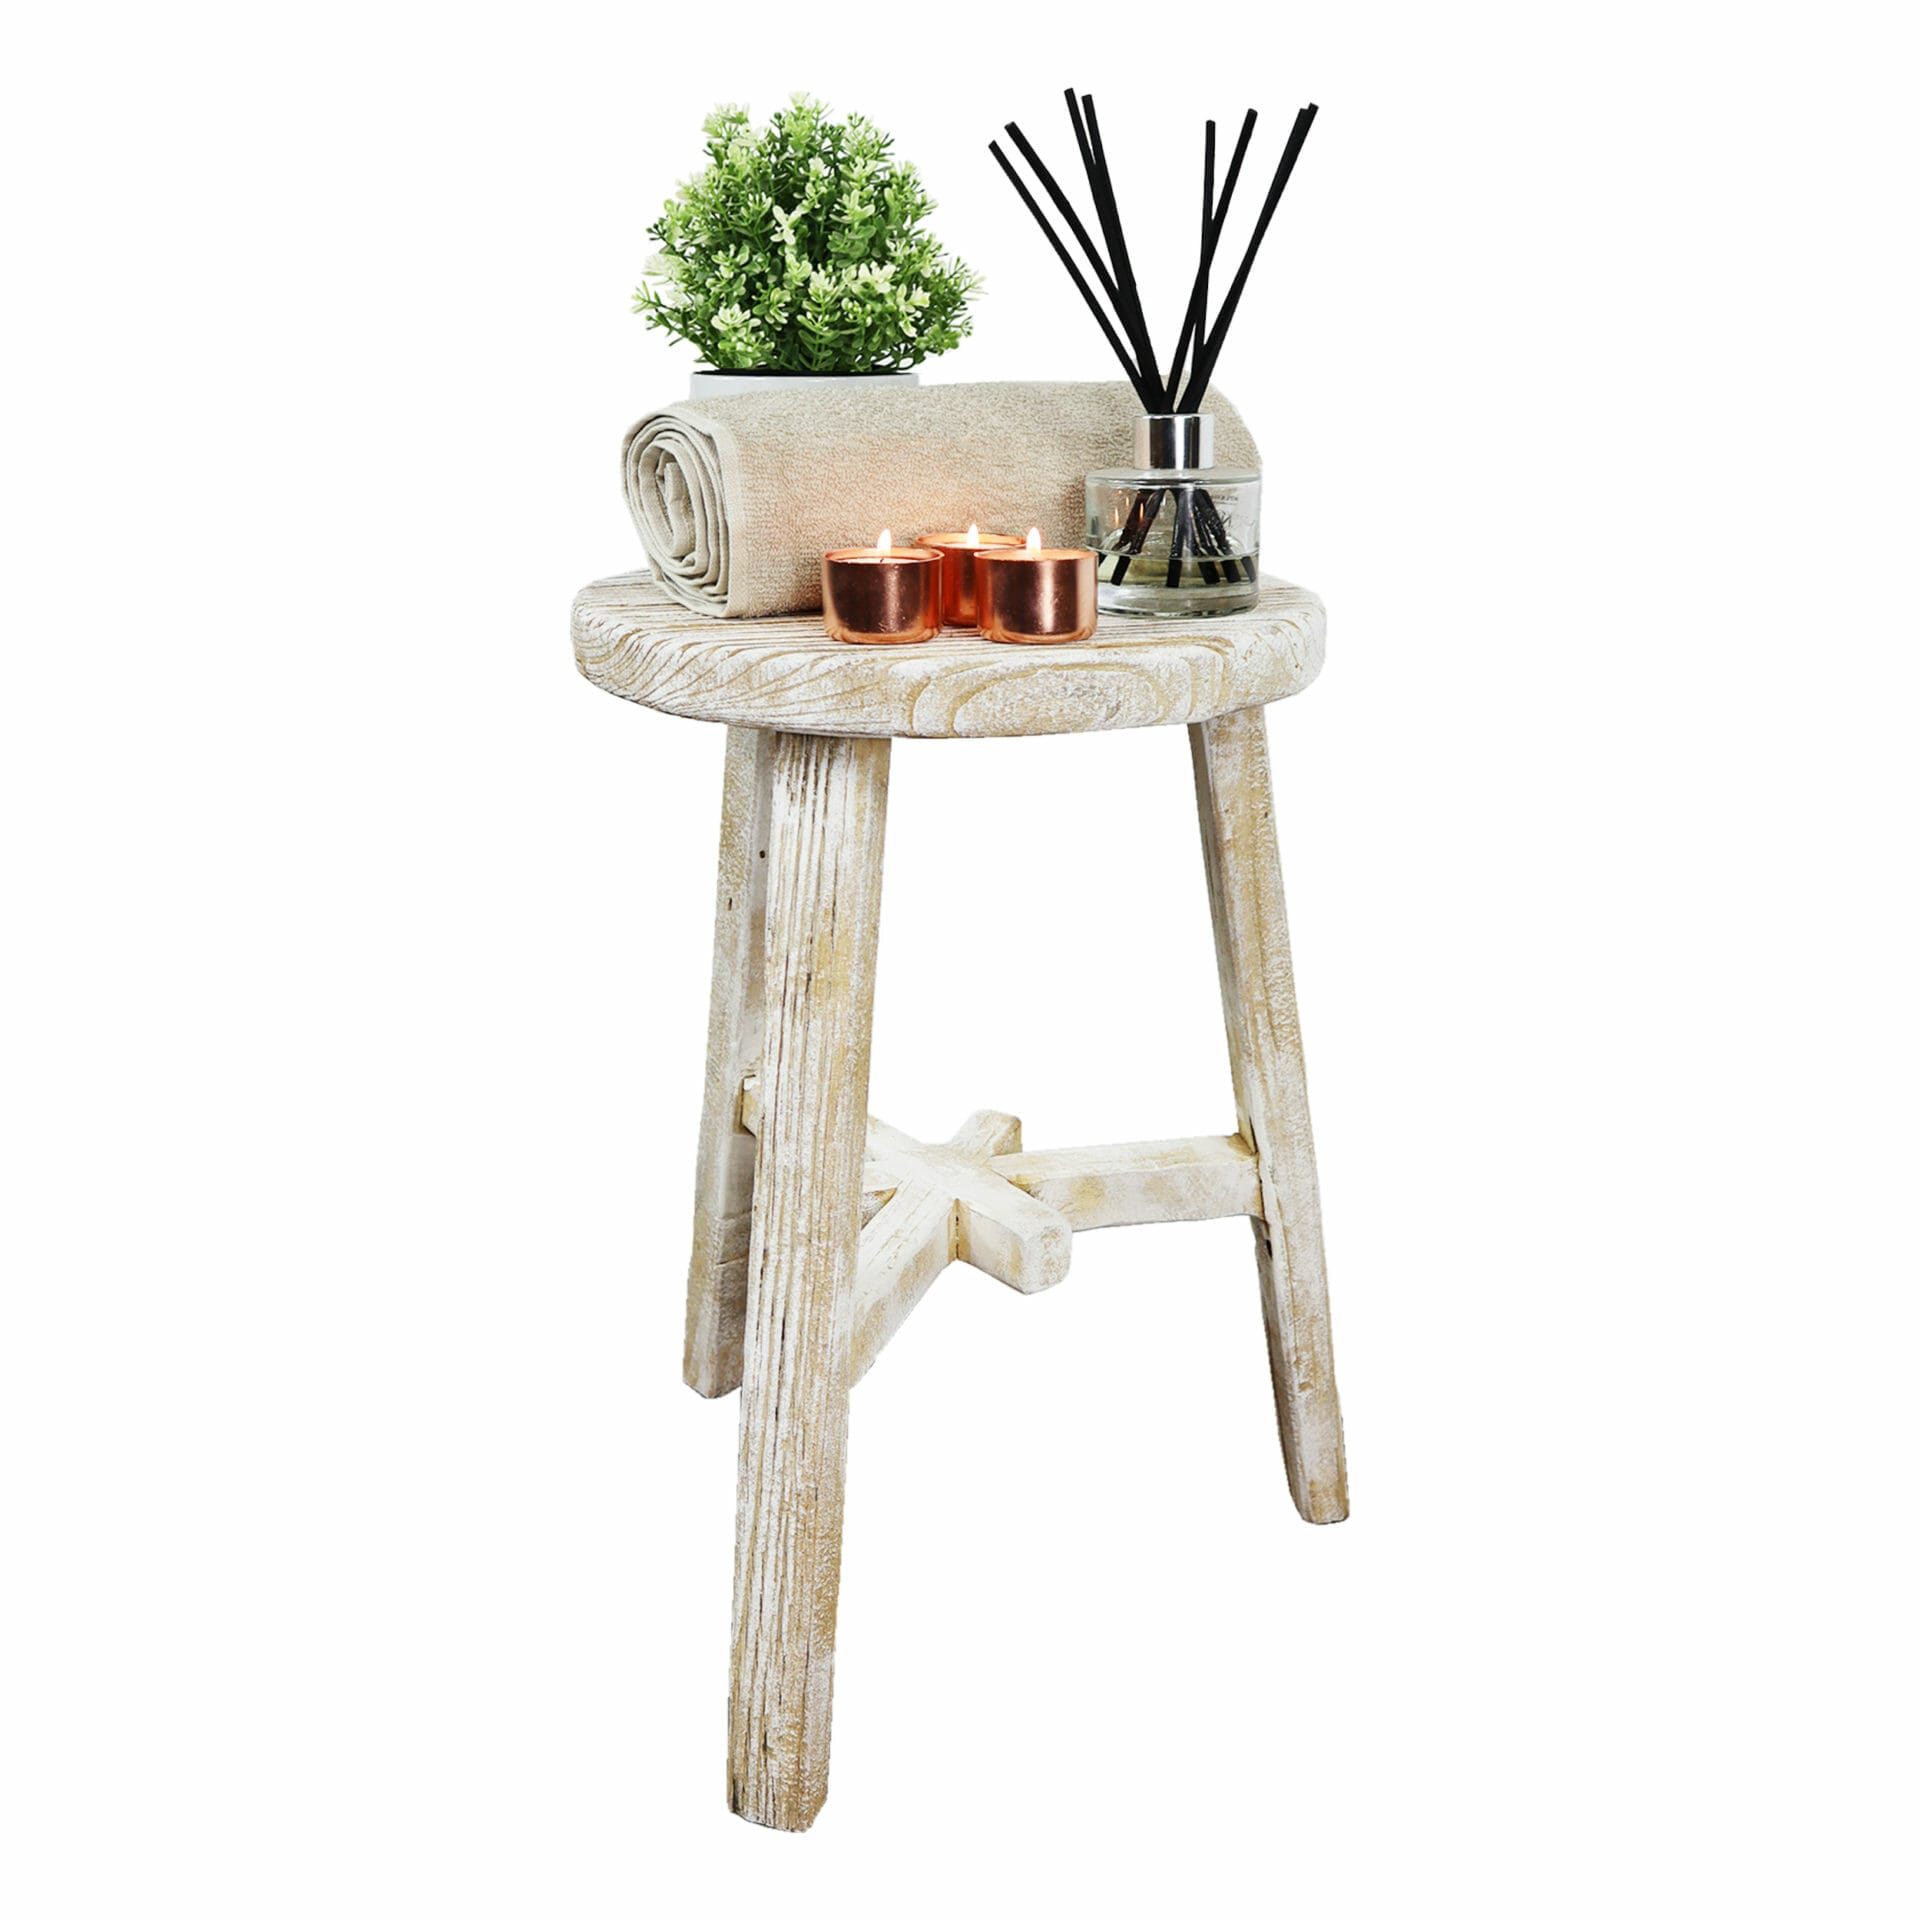 elm wood handmade stool white wash finish rustic furniture